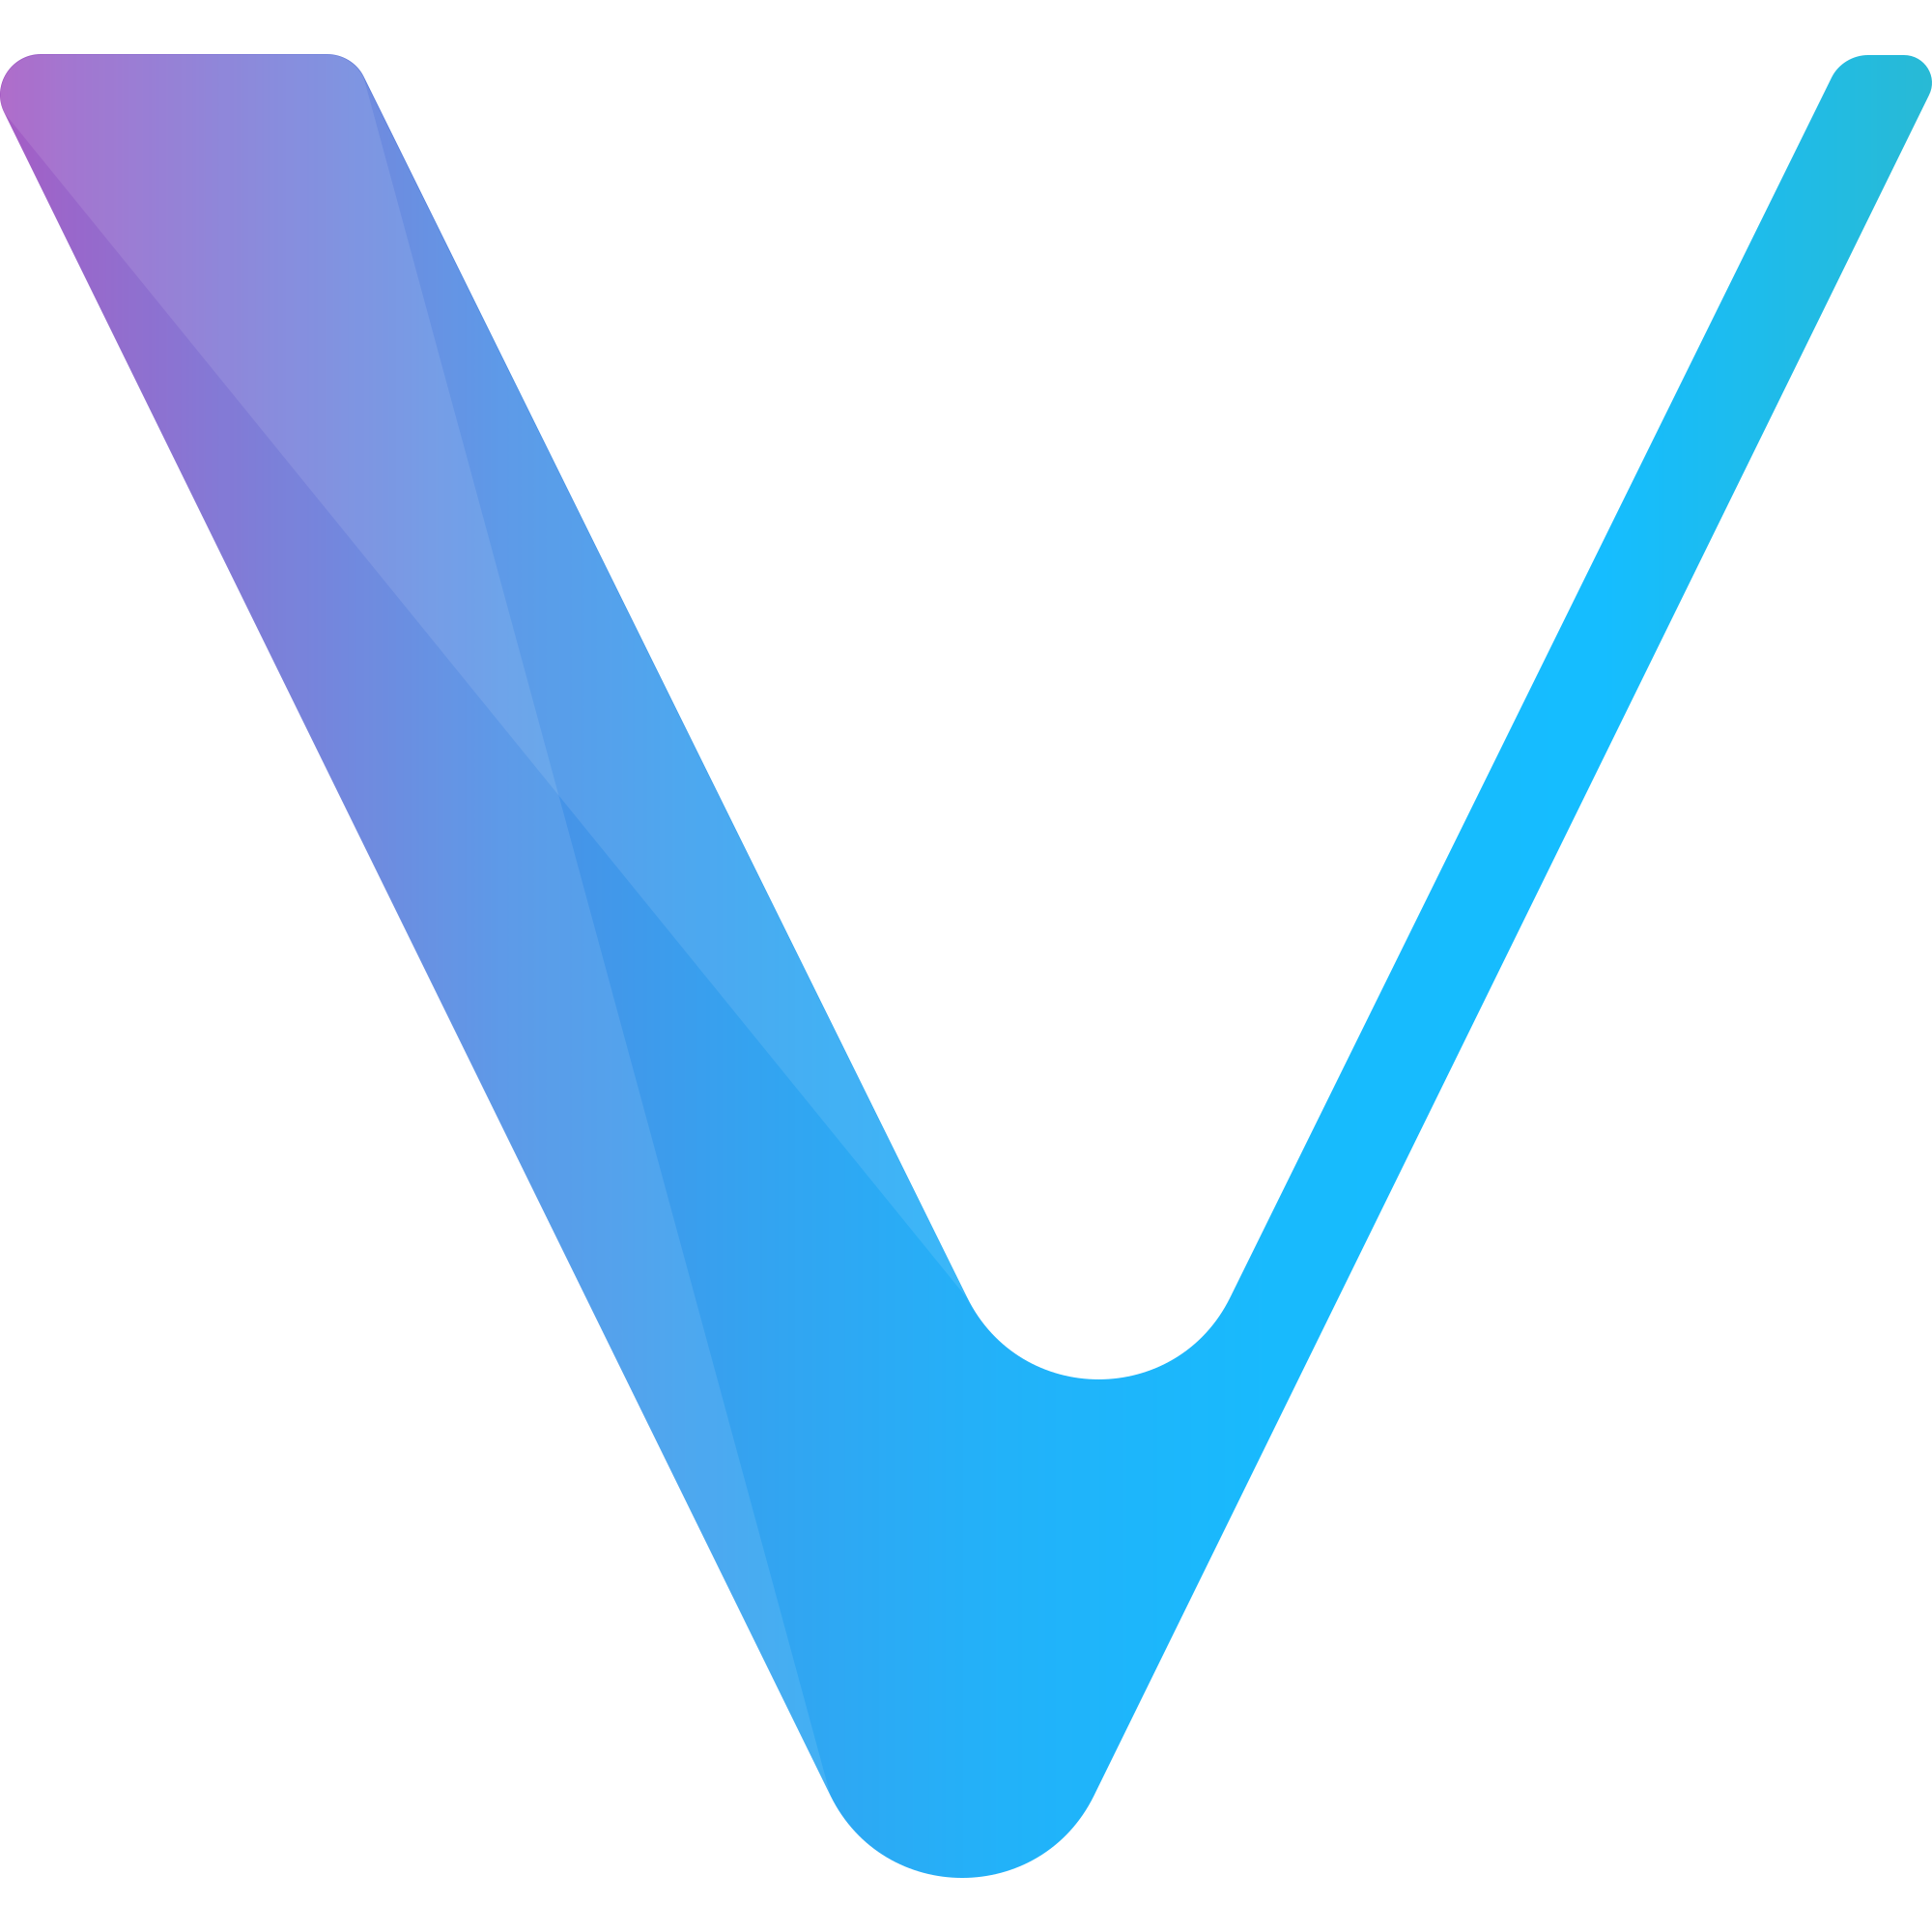 vechain logo